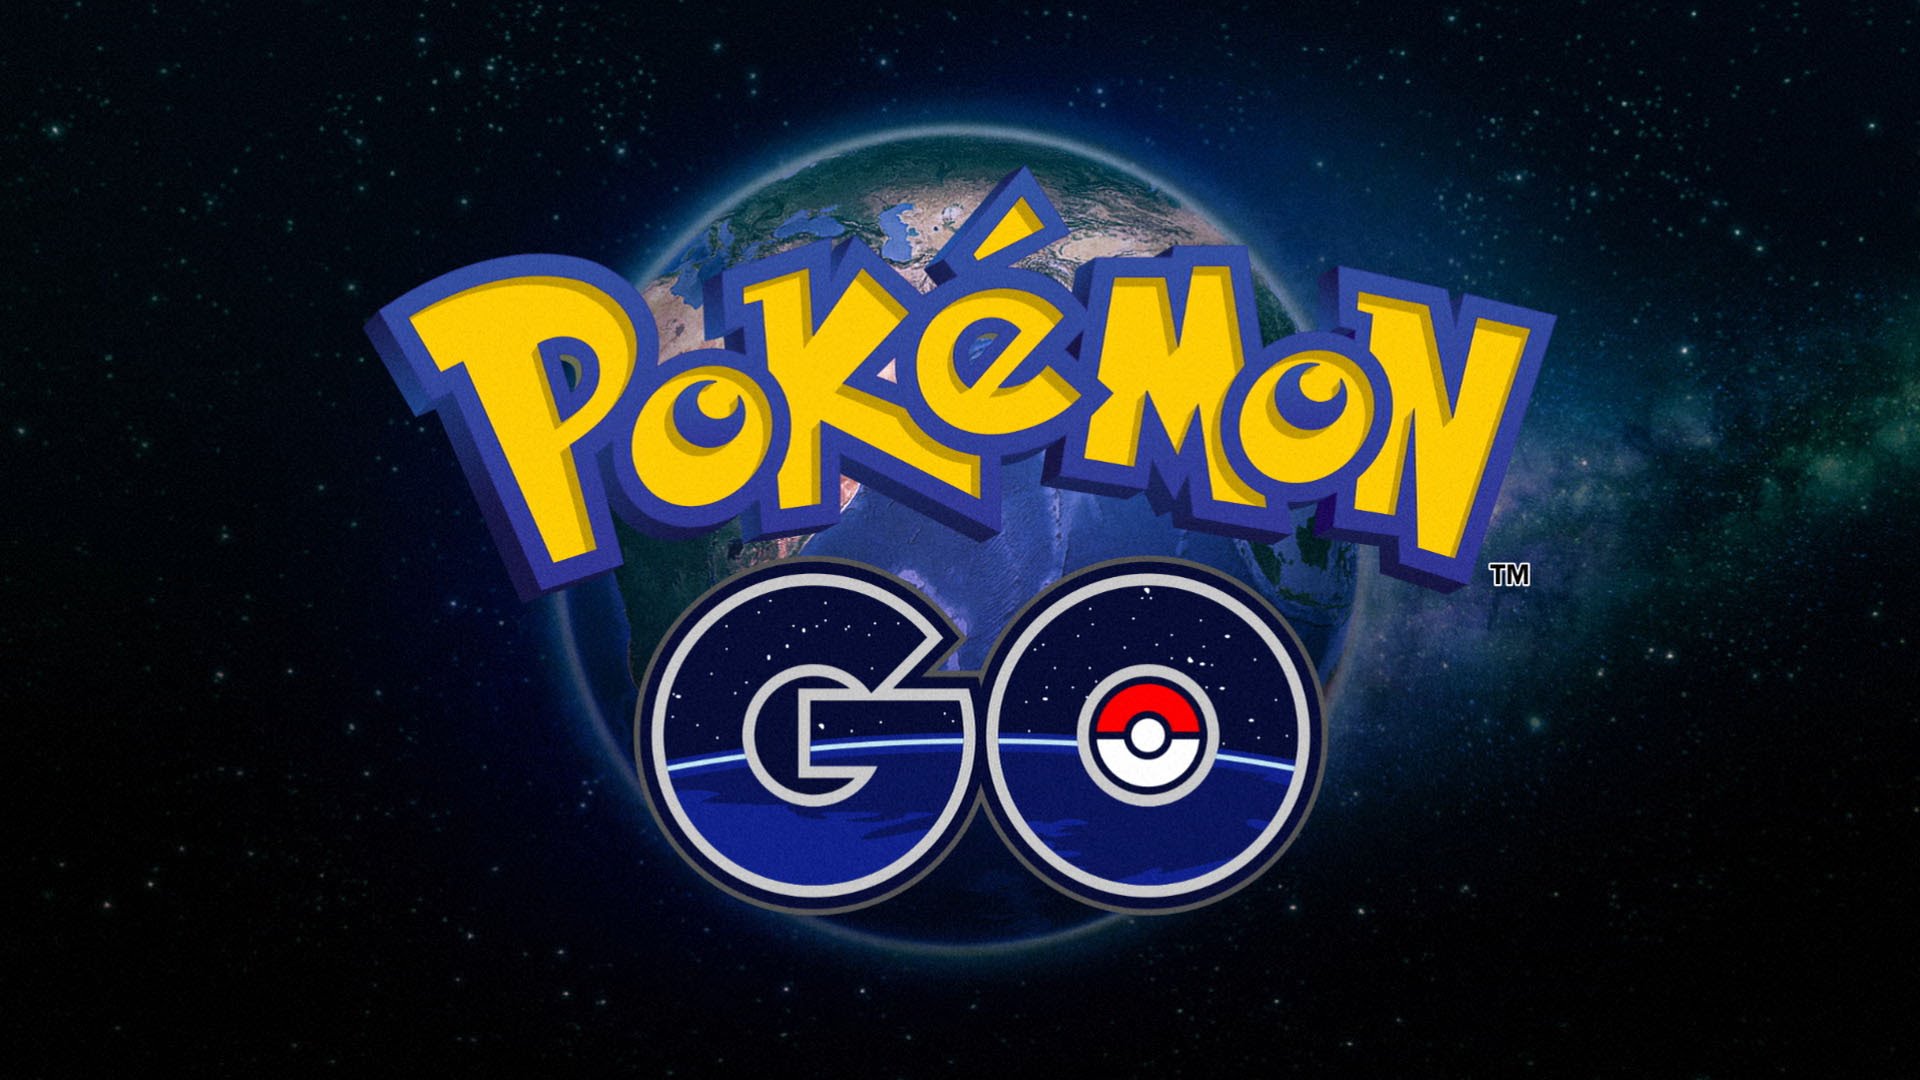 PokemonGo_Logo